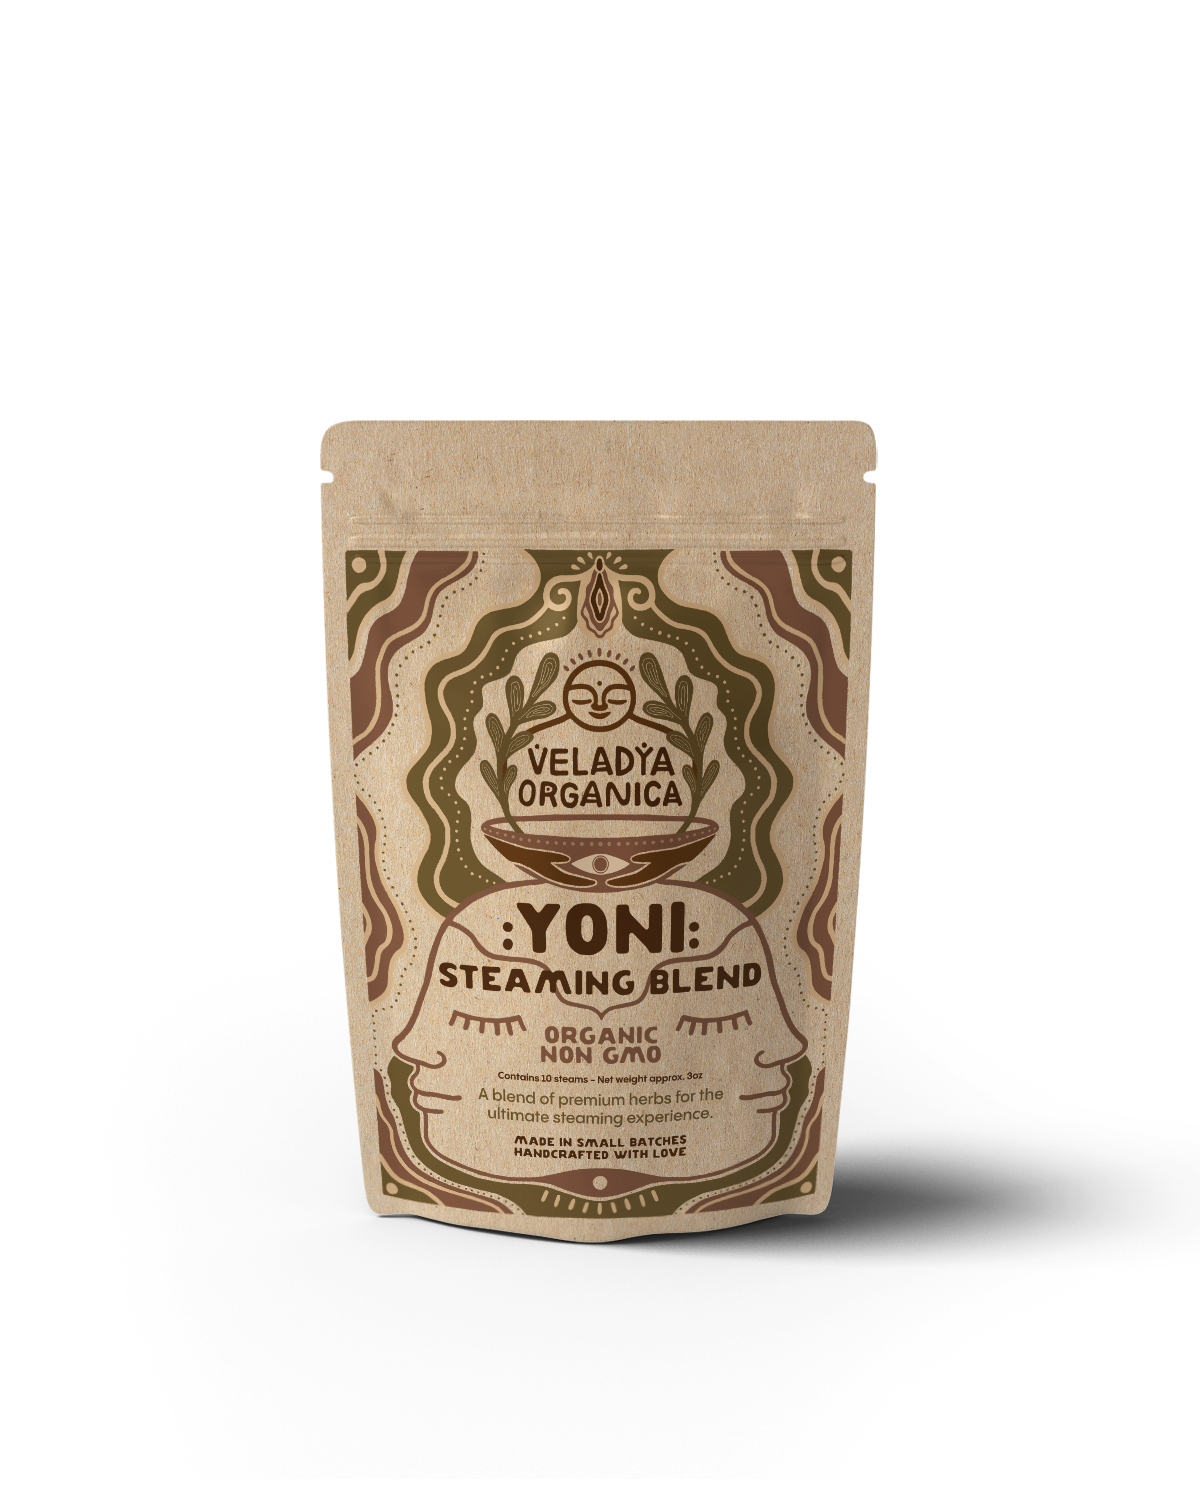 Yoni Steaming Herbs